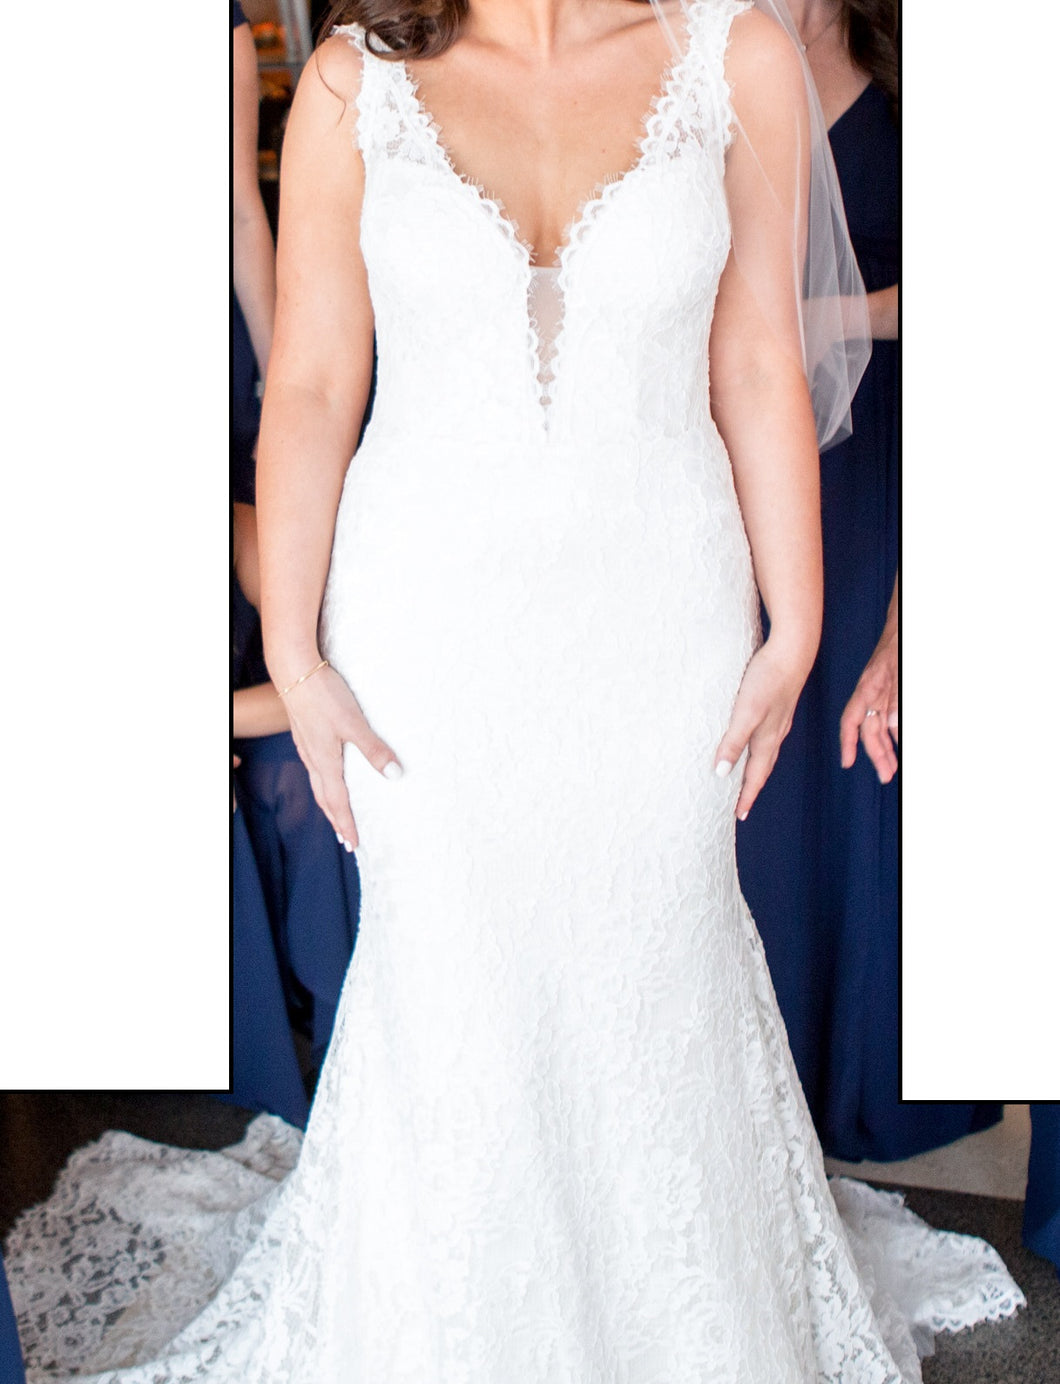 Pnina Tornai 'V Neck Sheath' size 4 used wedding dress front view on bride